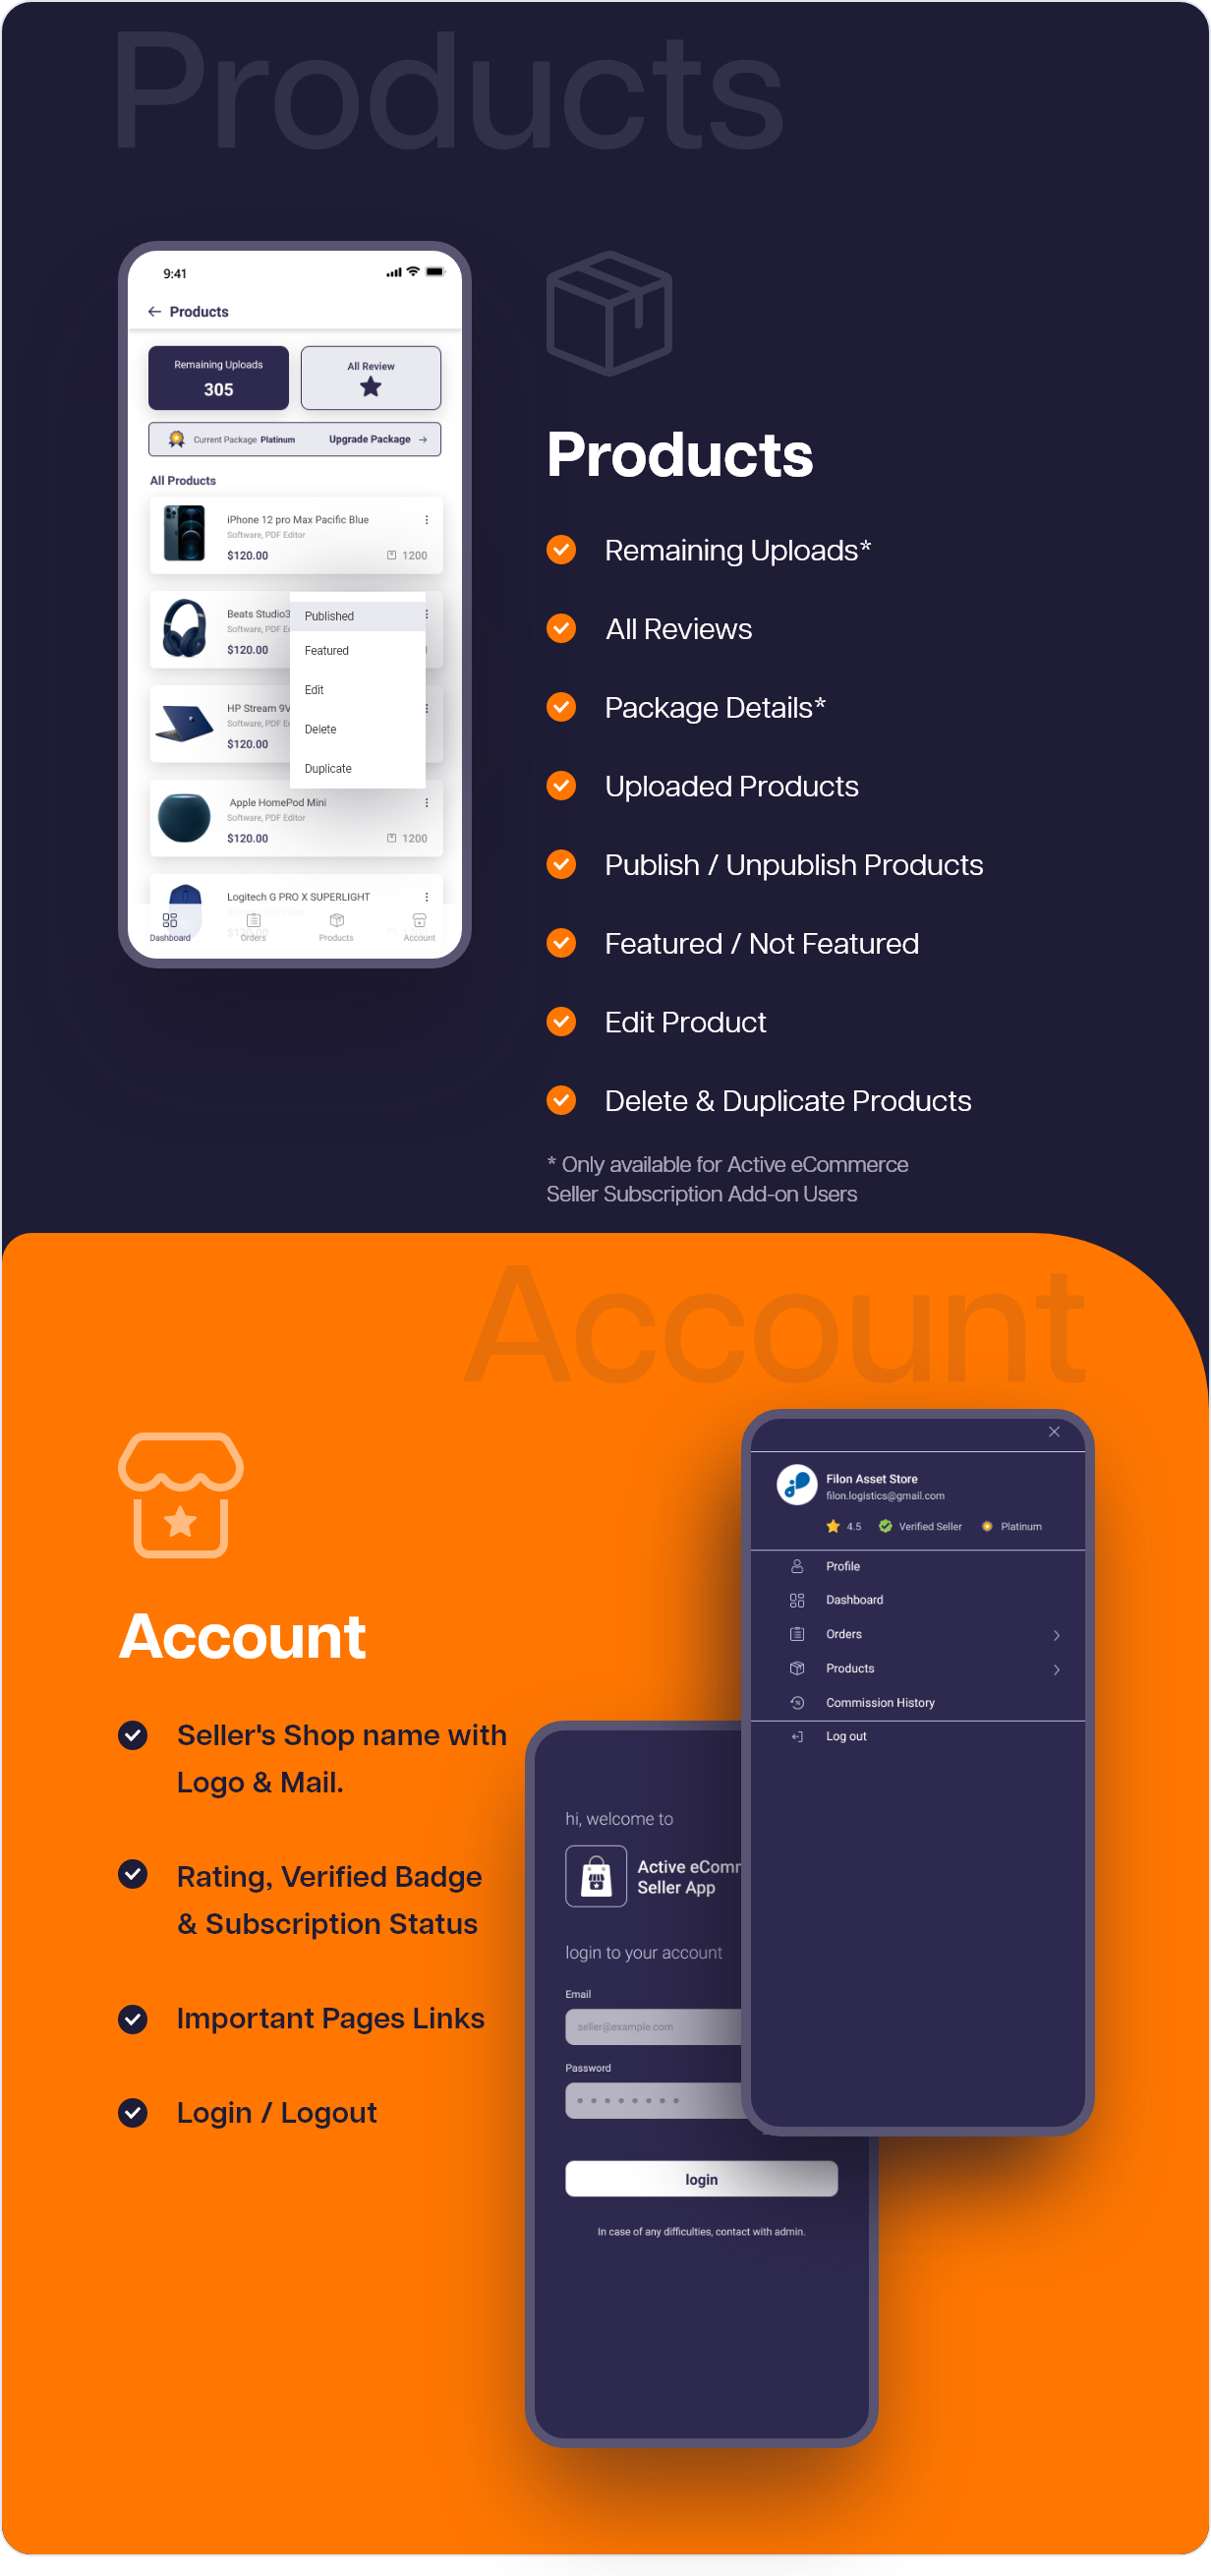 Active eCommerce Seller App - 5